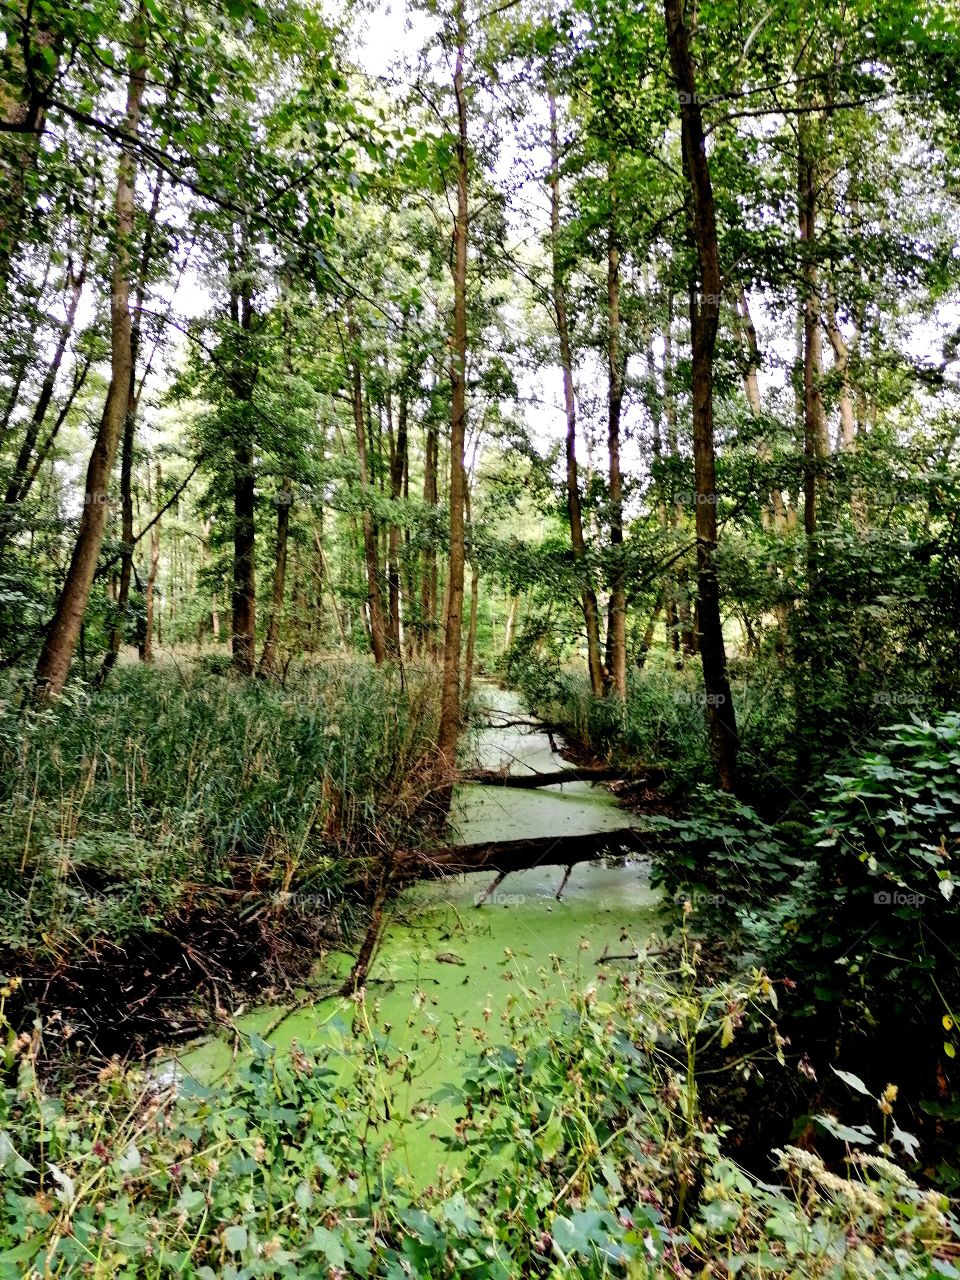 Fluß im Wald